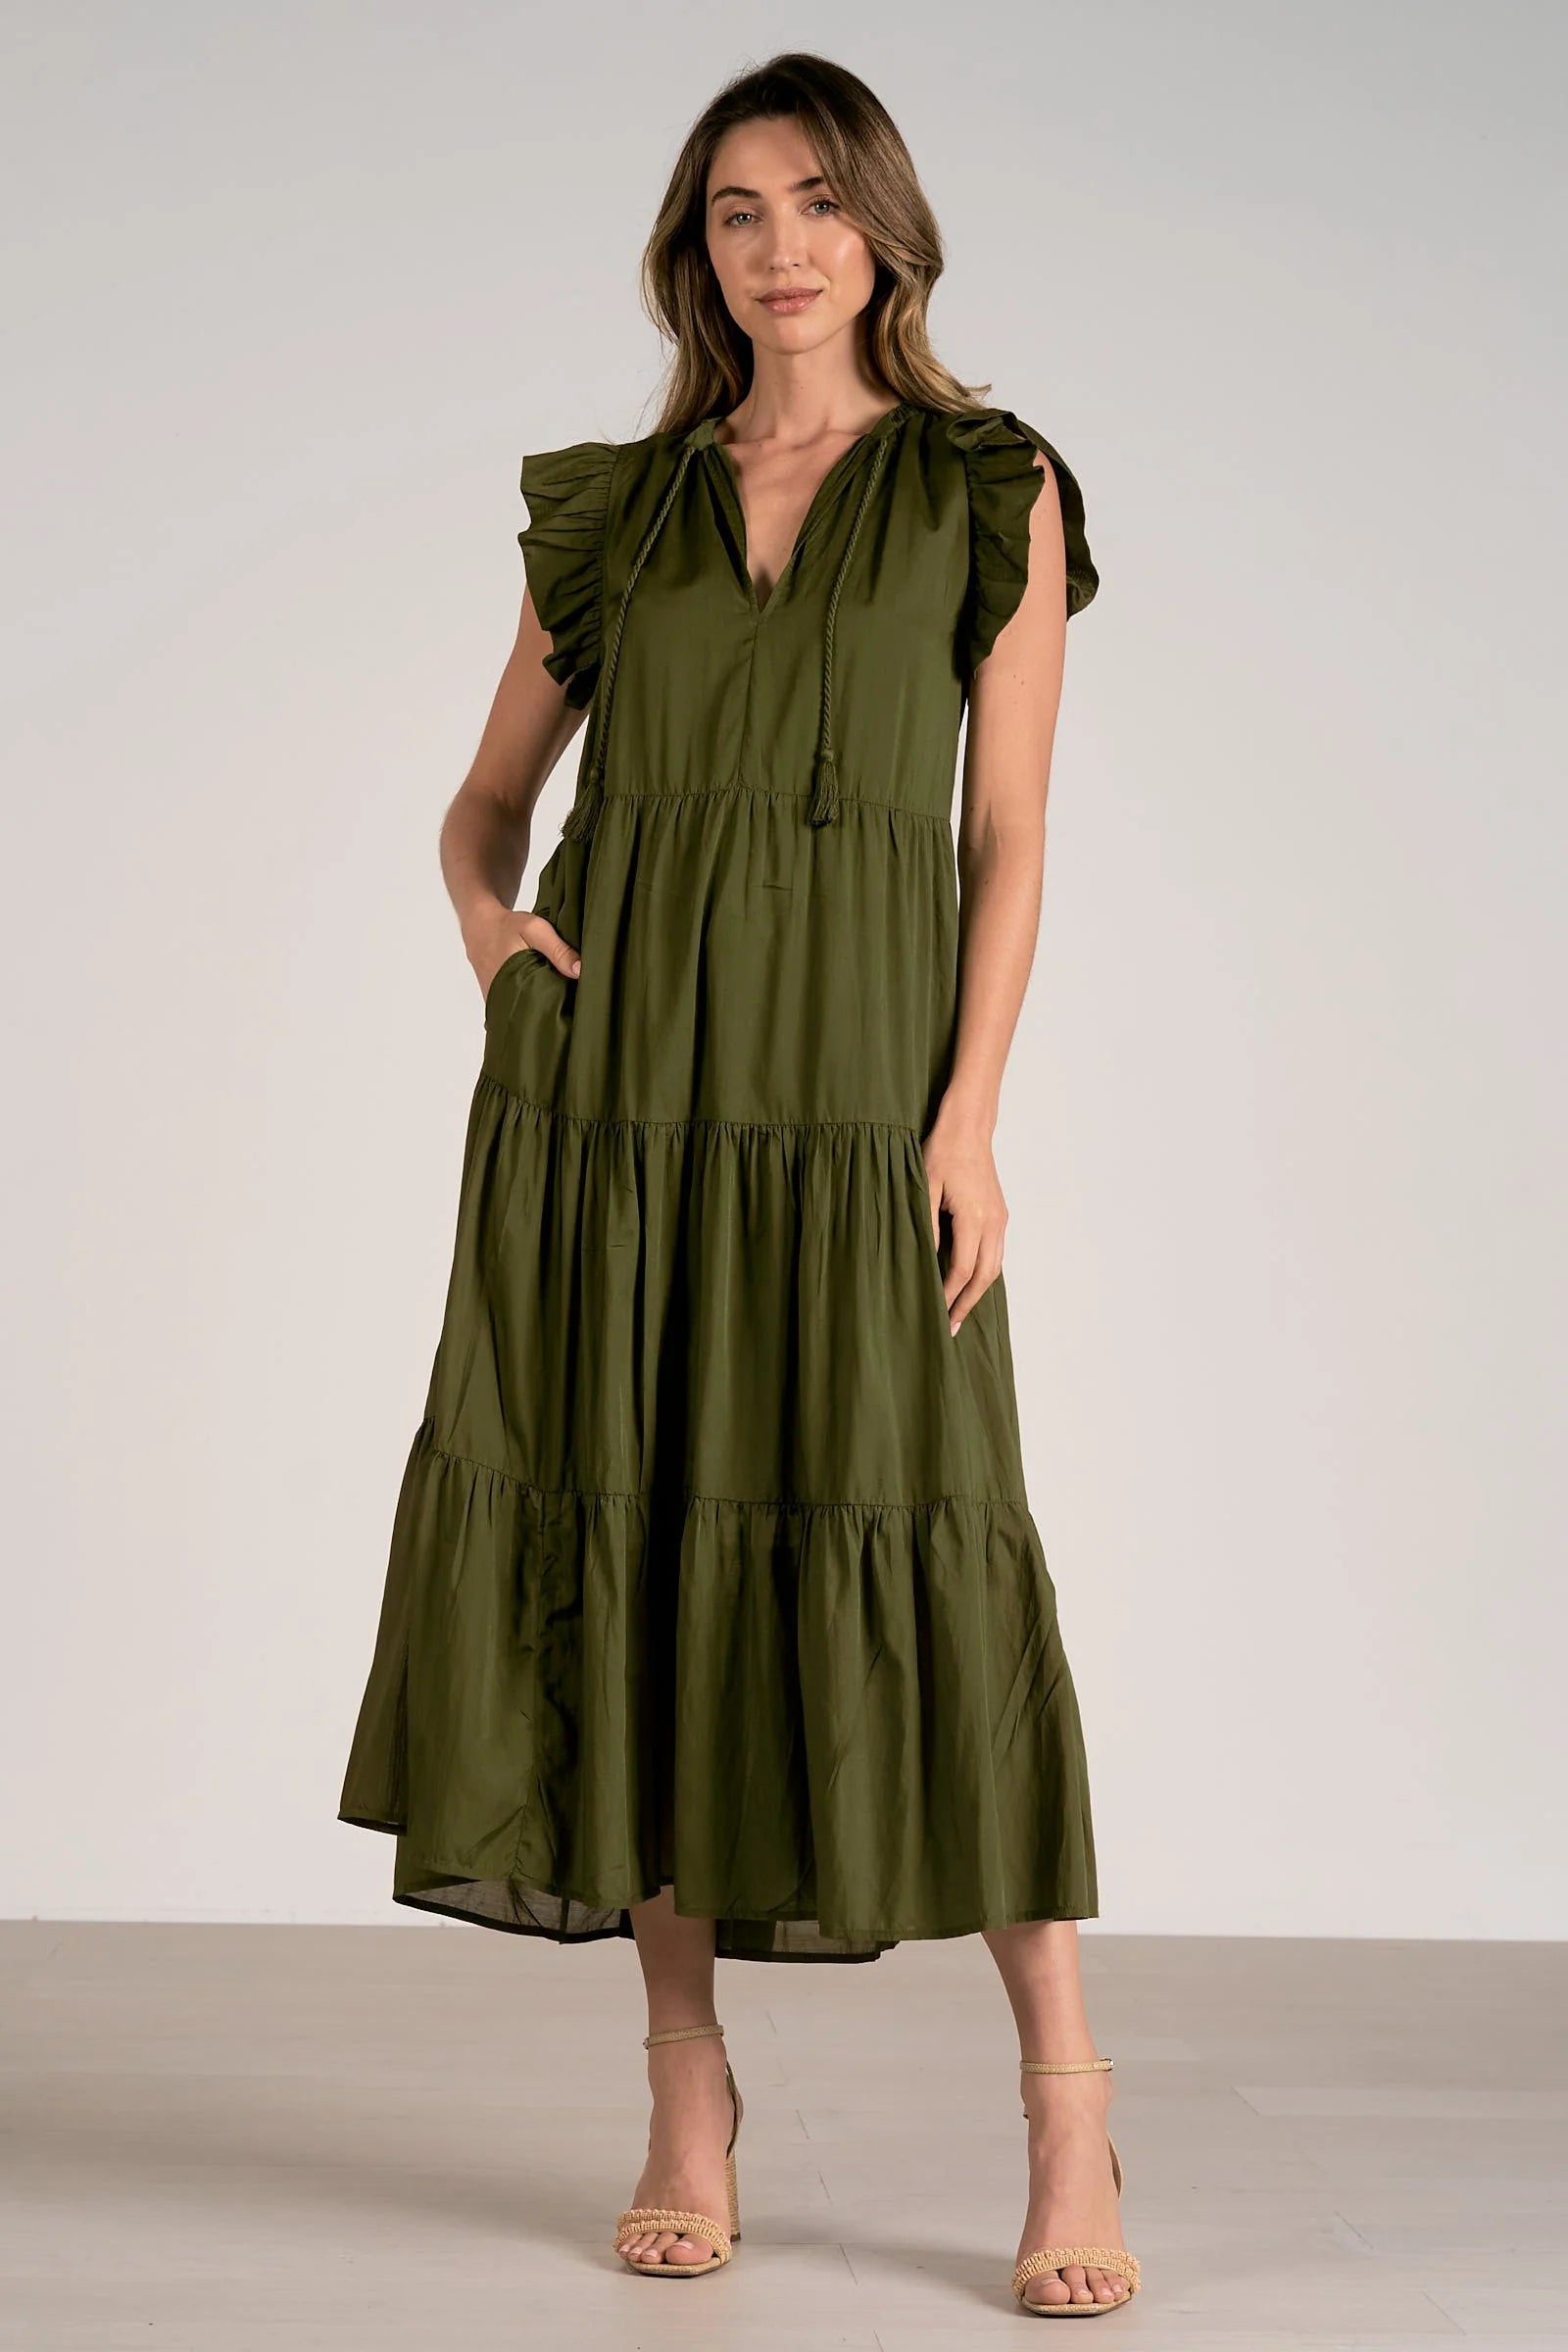 Neve Olive Green Dress